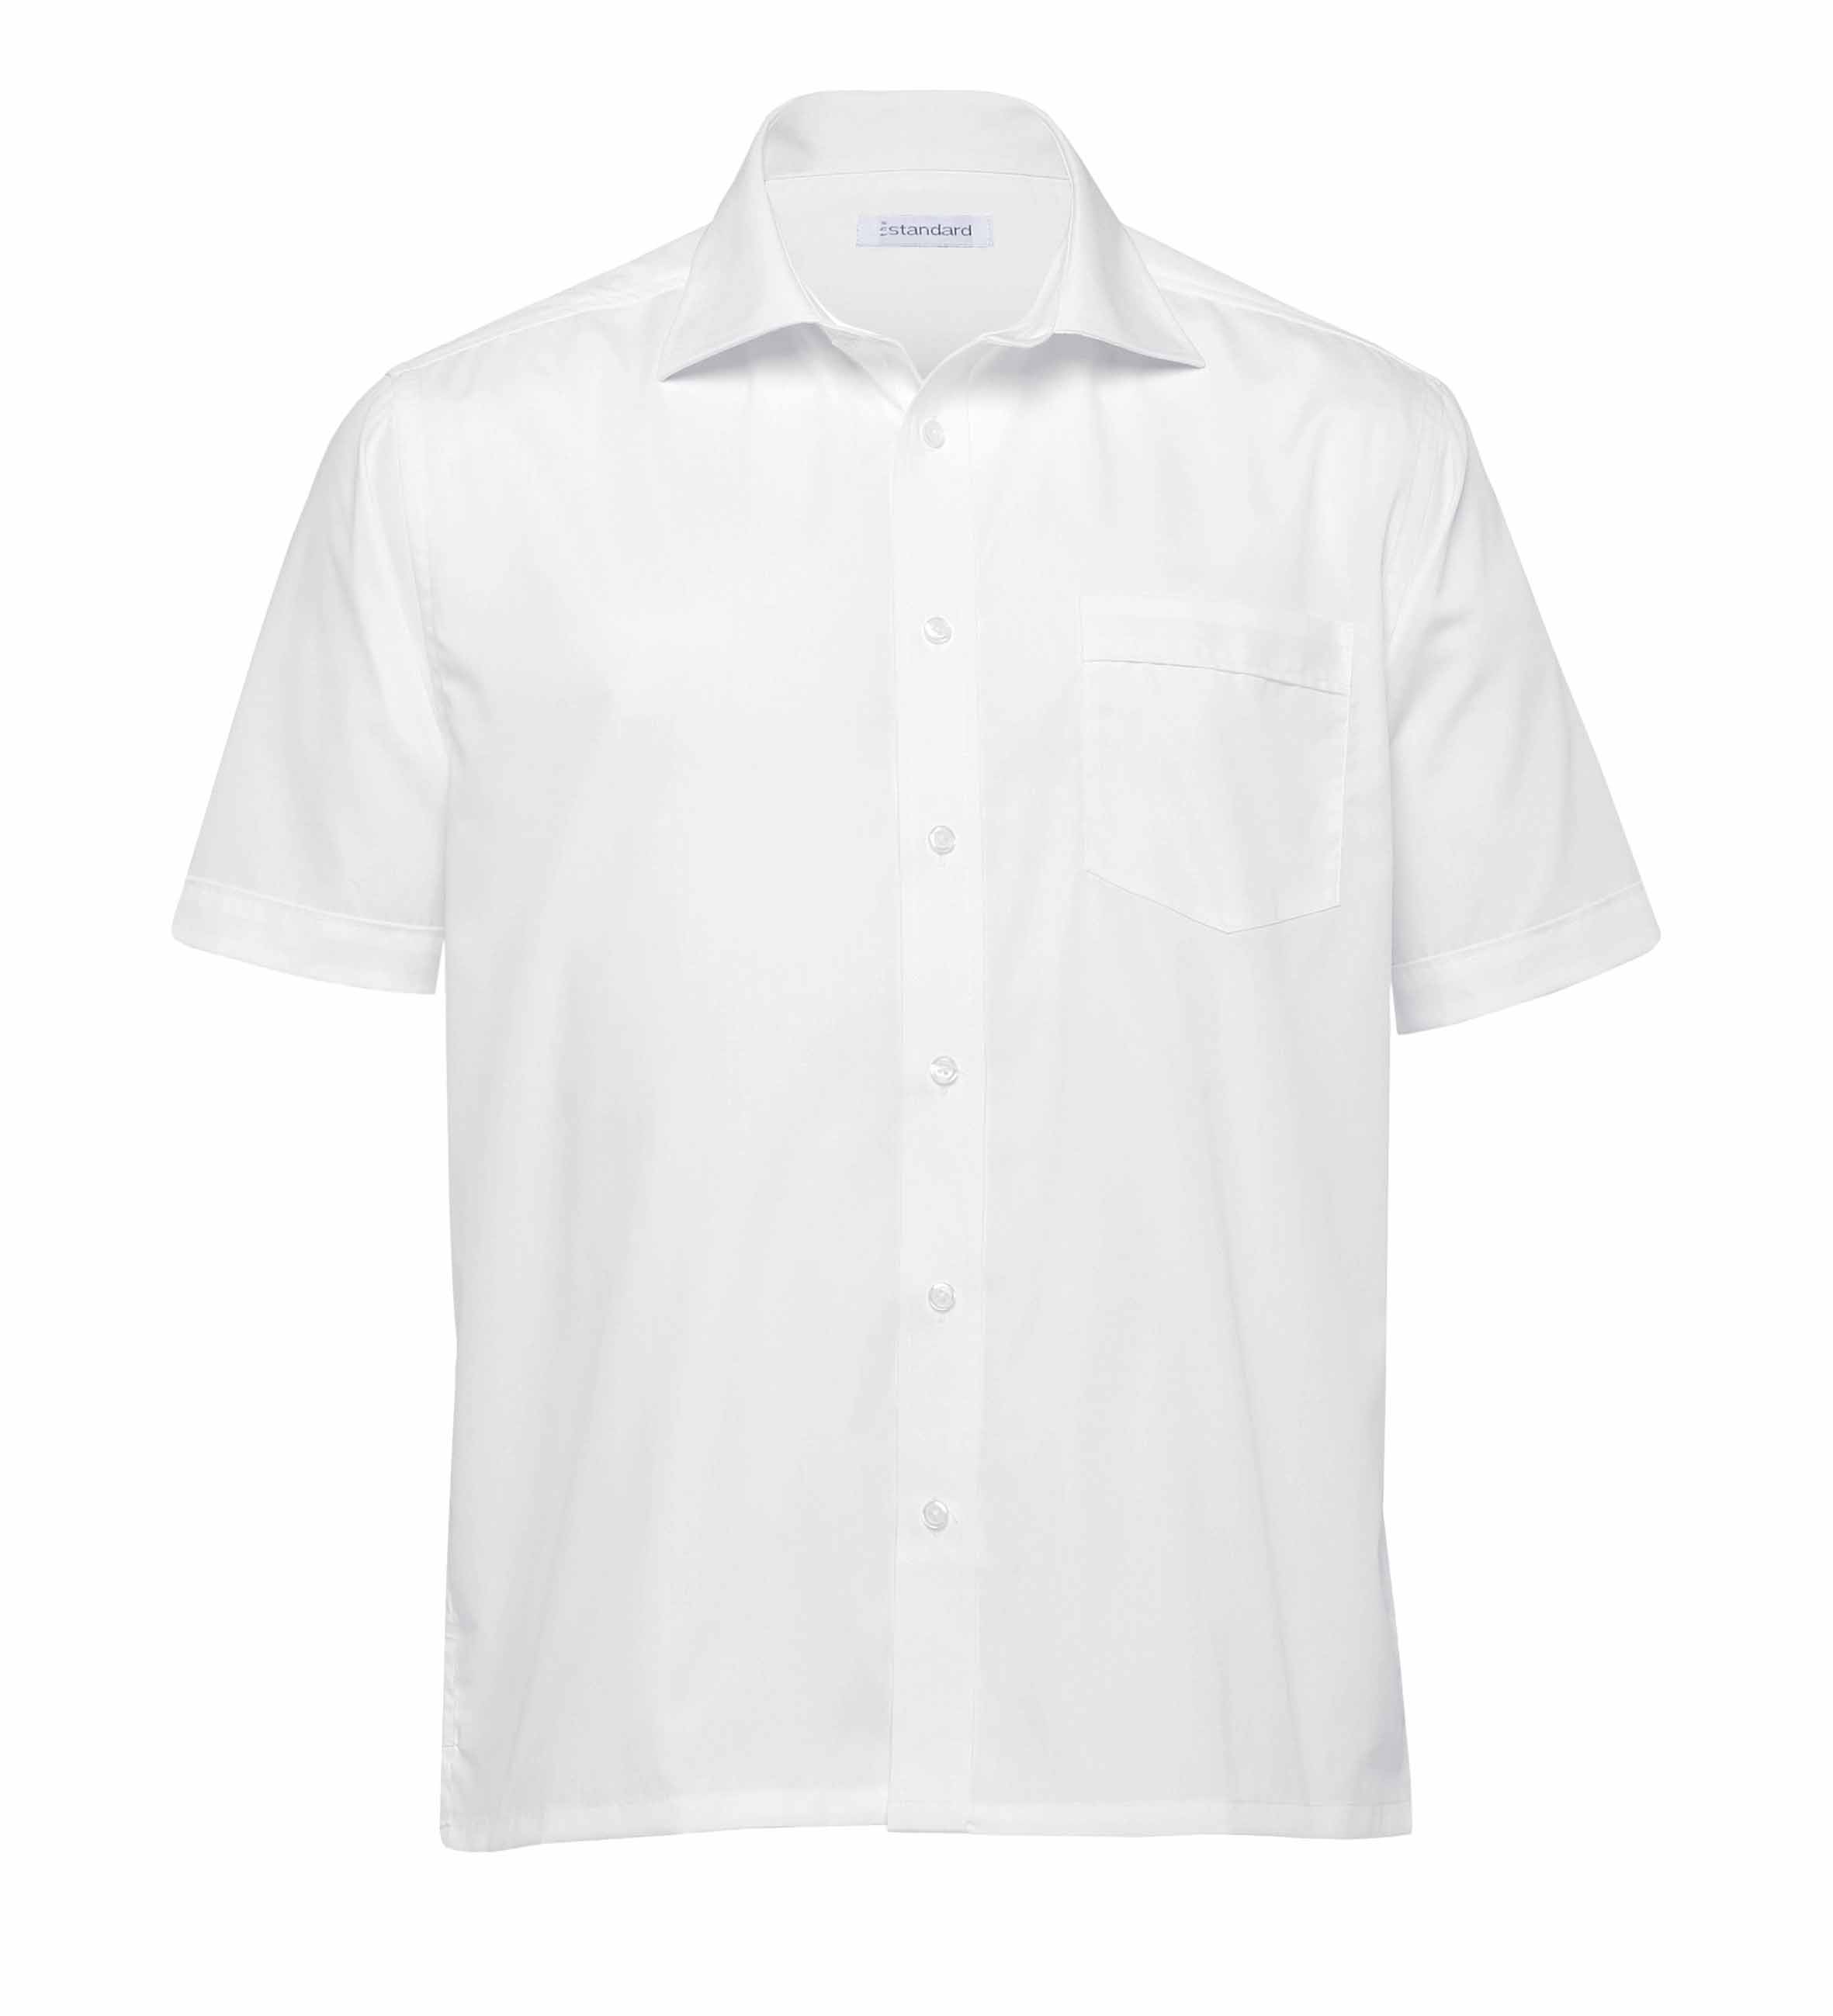 The Limited Teflon Shirt - Mens - Image Group